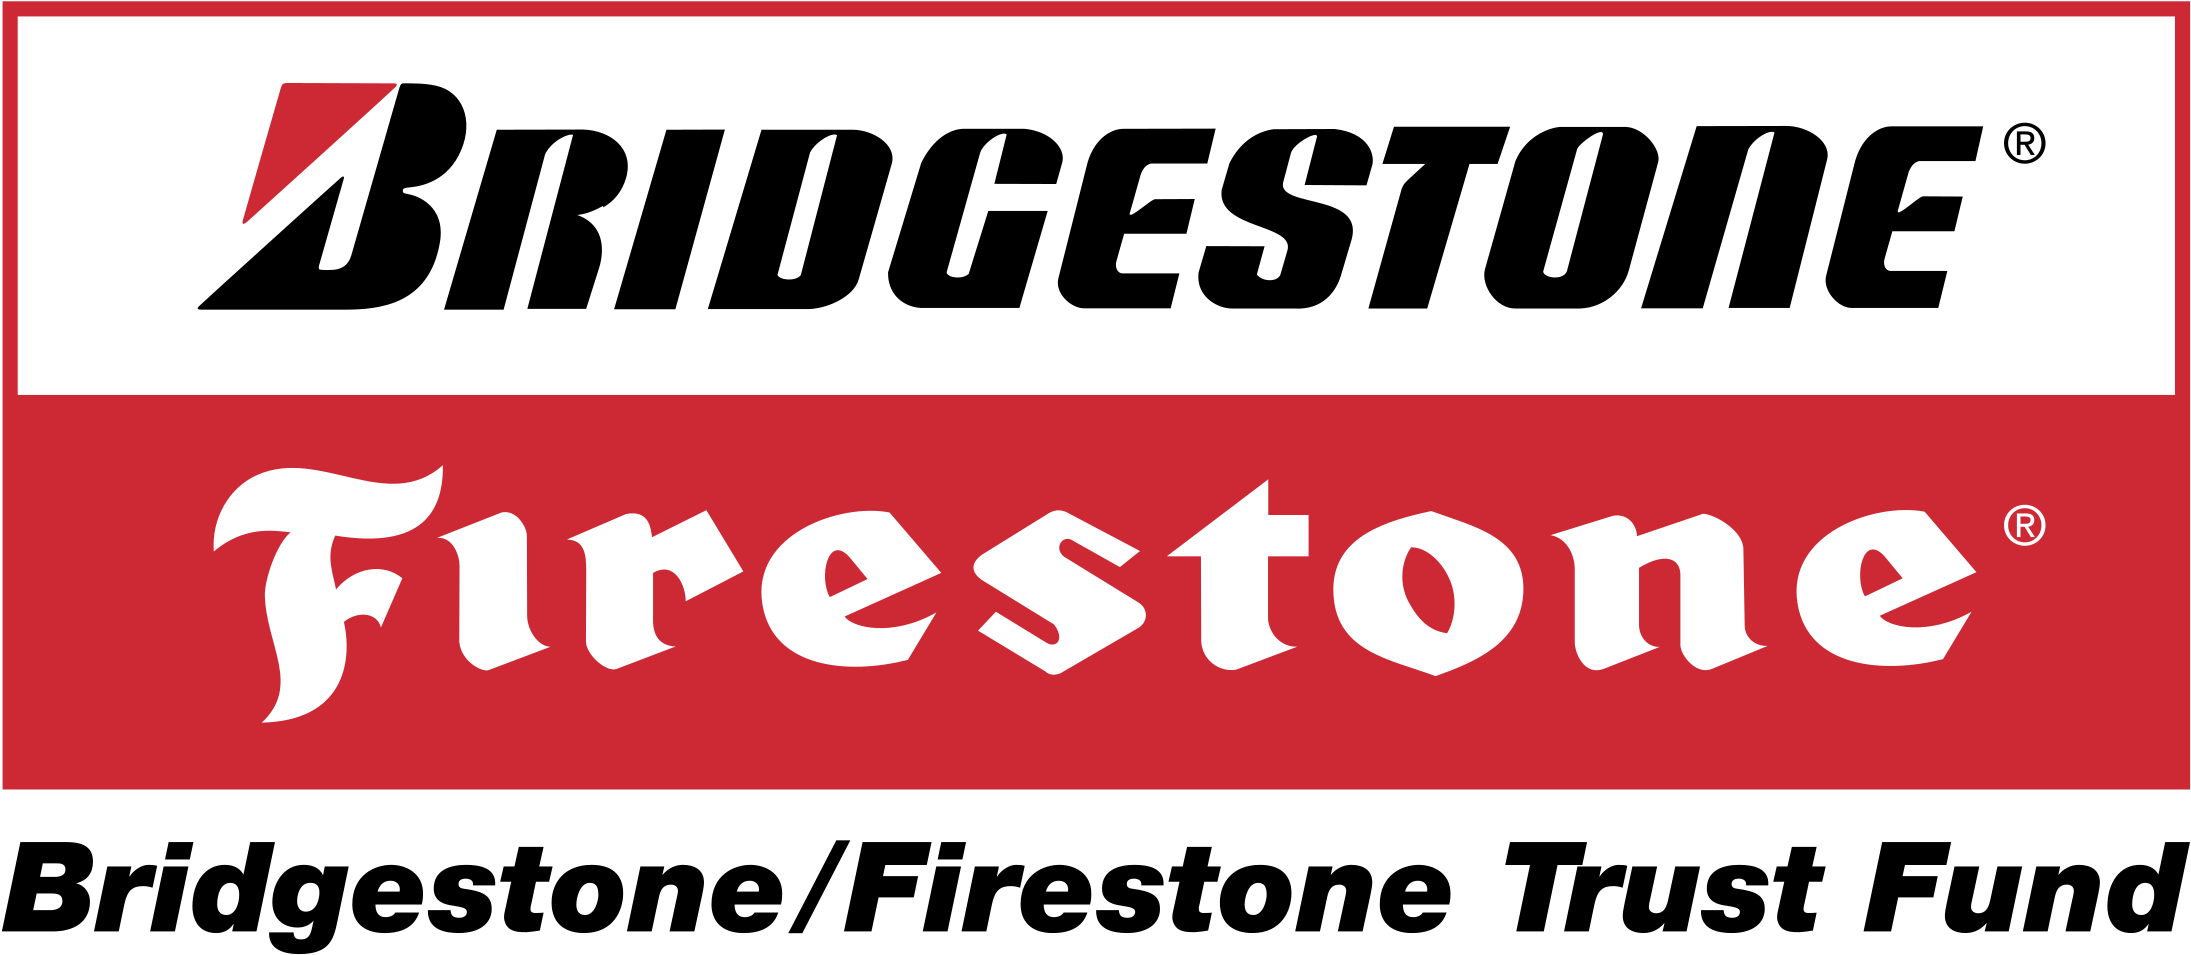 Download Bridgestone Firestone Trust Fund Logo Png Transparent Pluspng.com  - Firestone, Transparent background PNG HD thumbnail